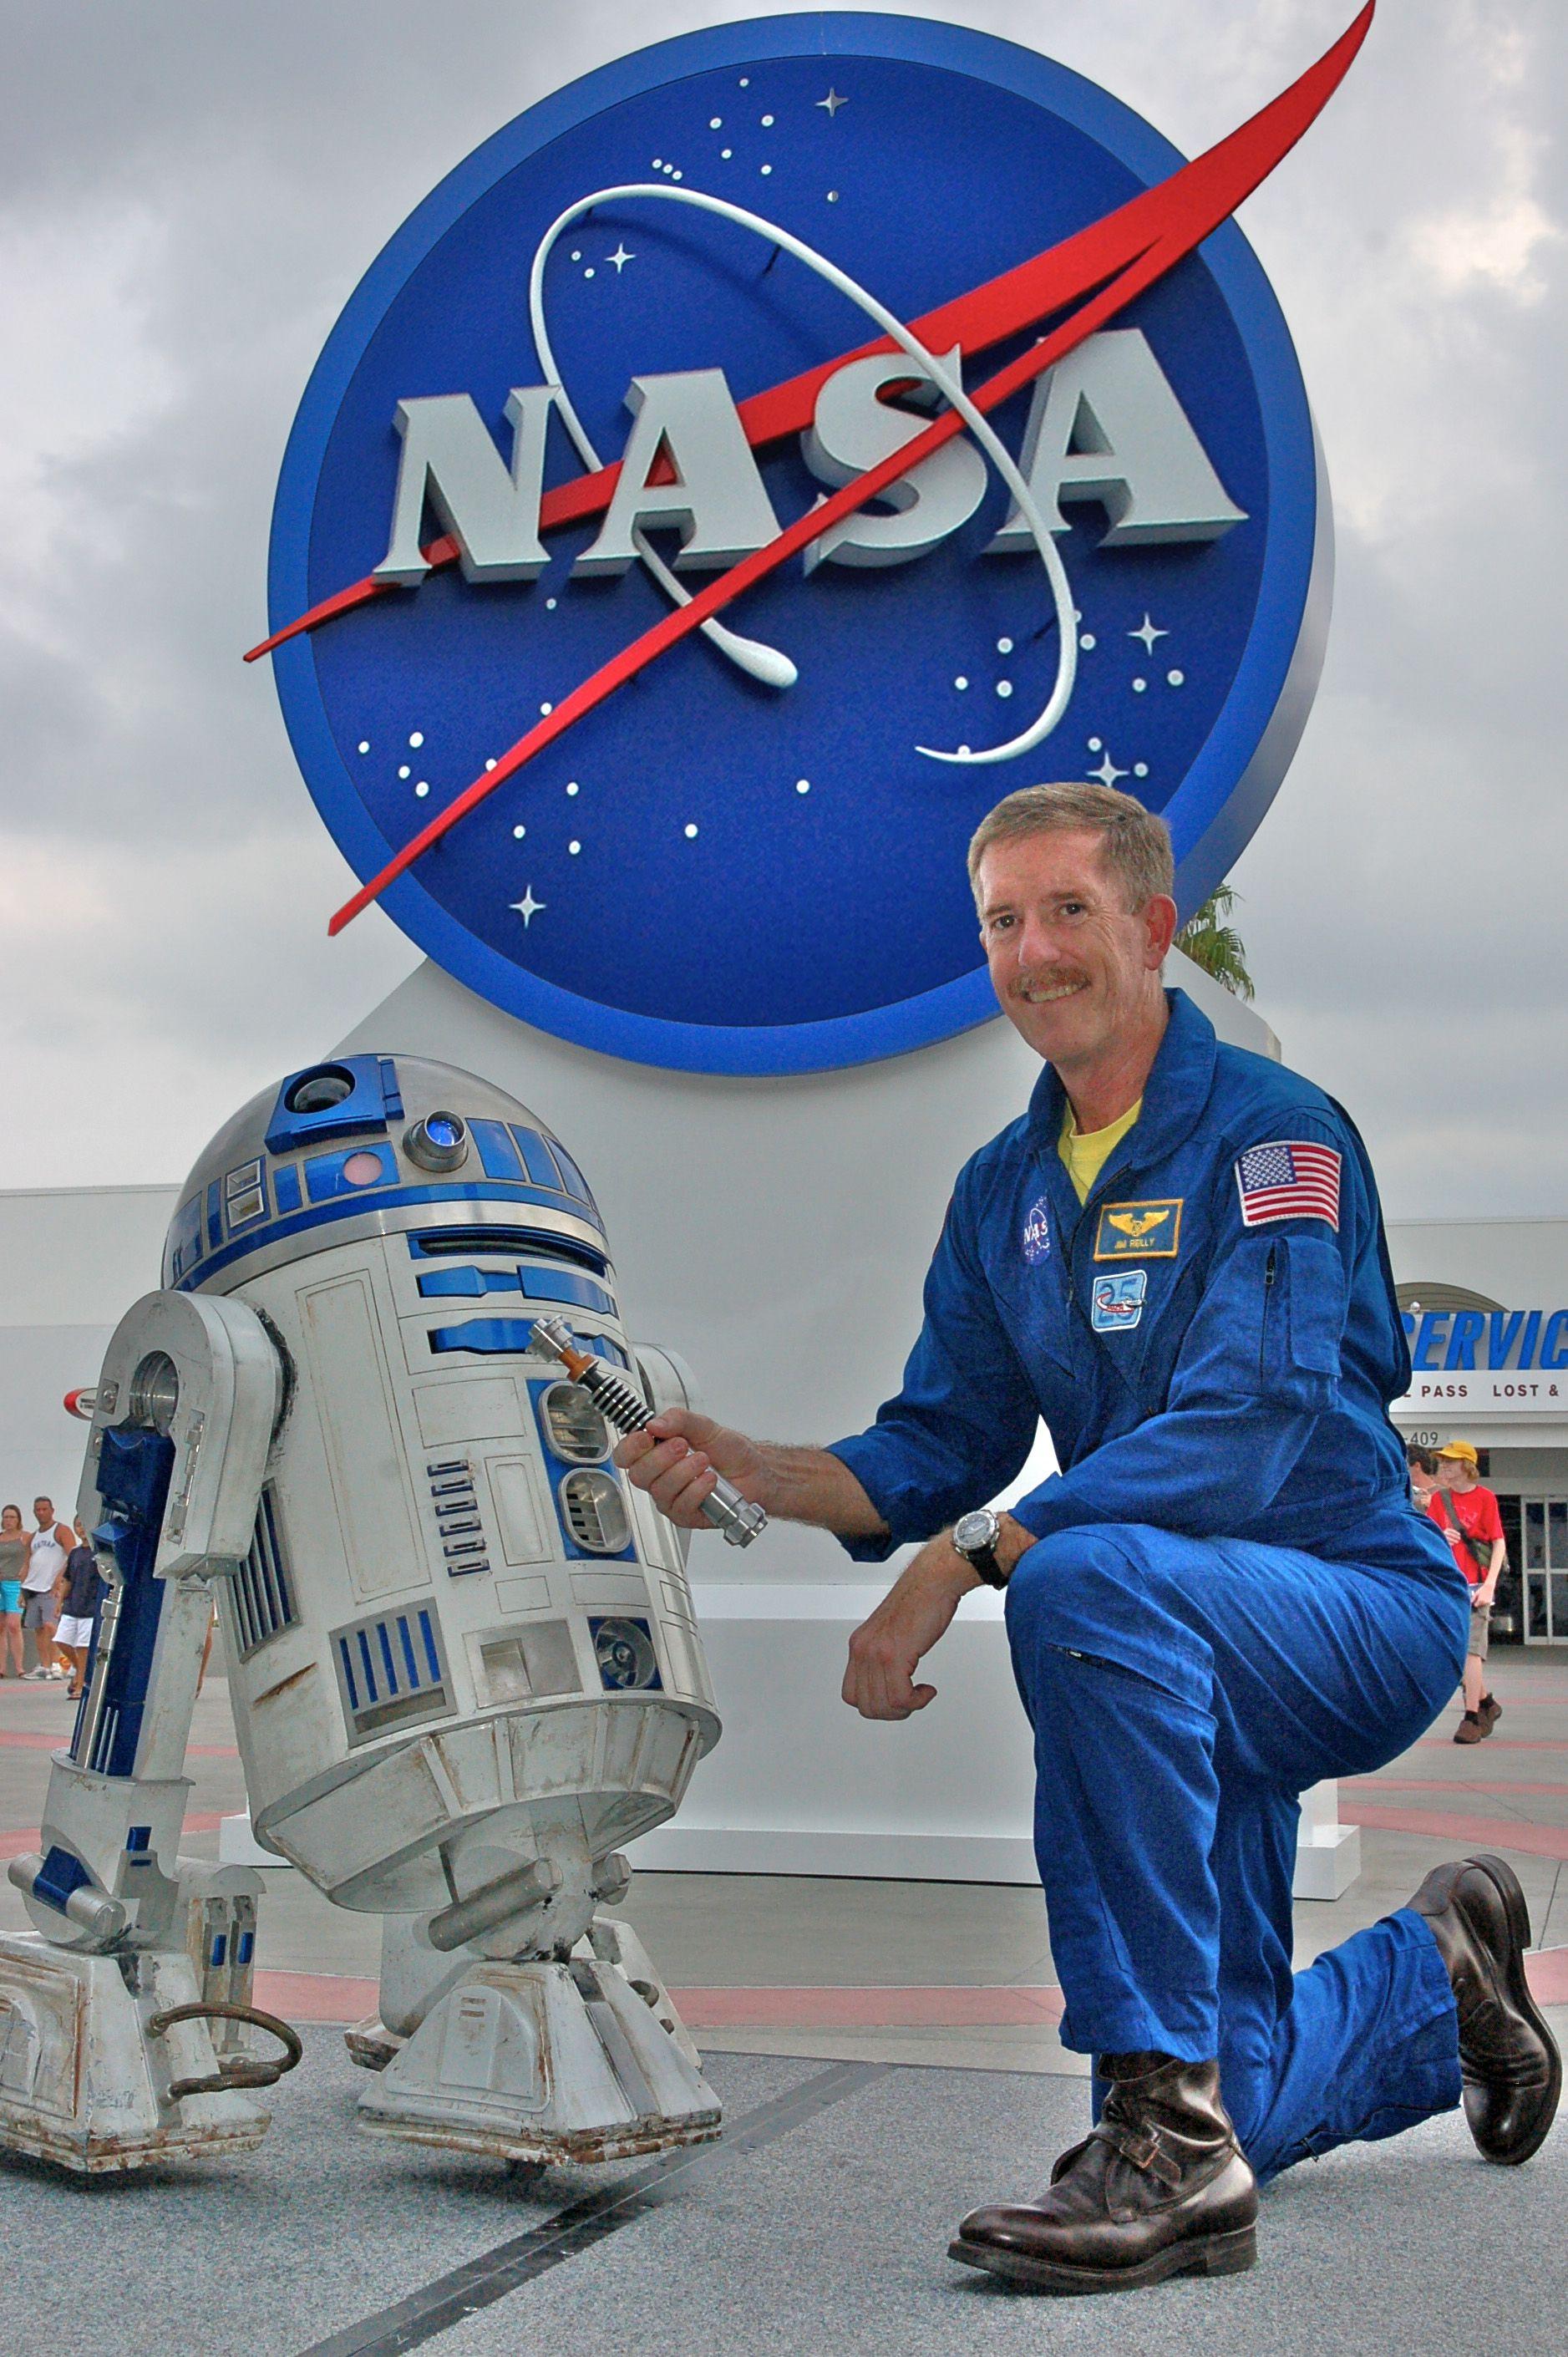 Star Wars NASA Logo - NASA Taken Into Space Reflect Accomplishments on Earth